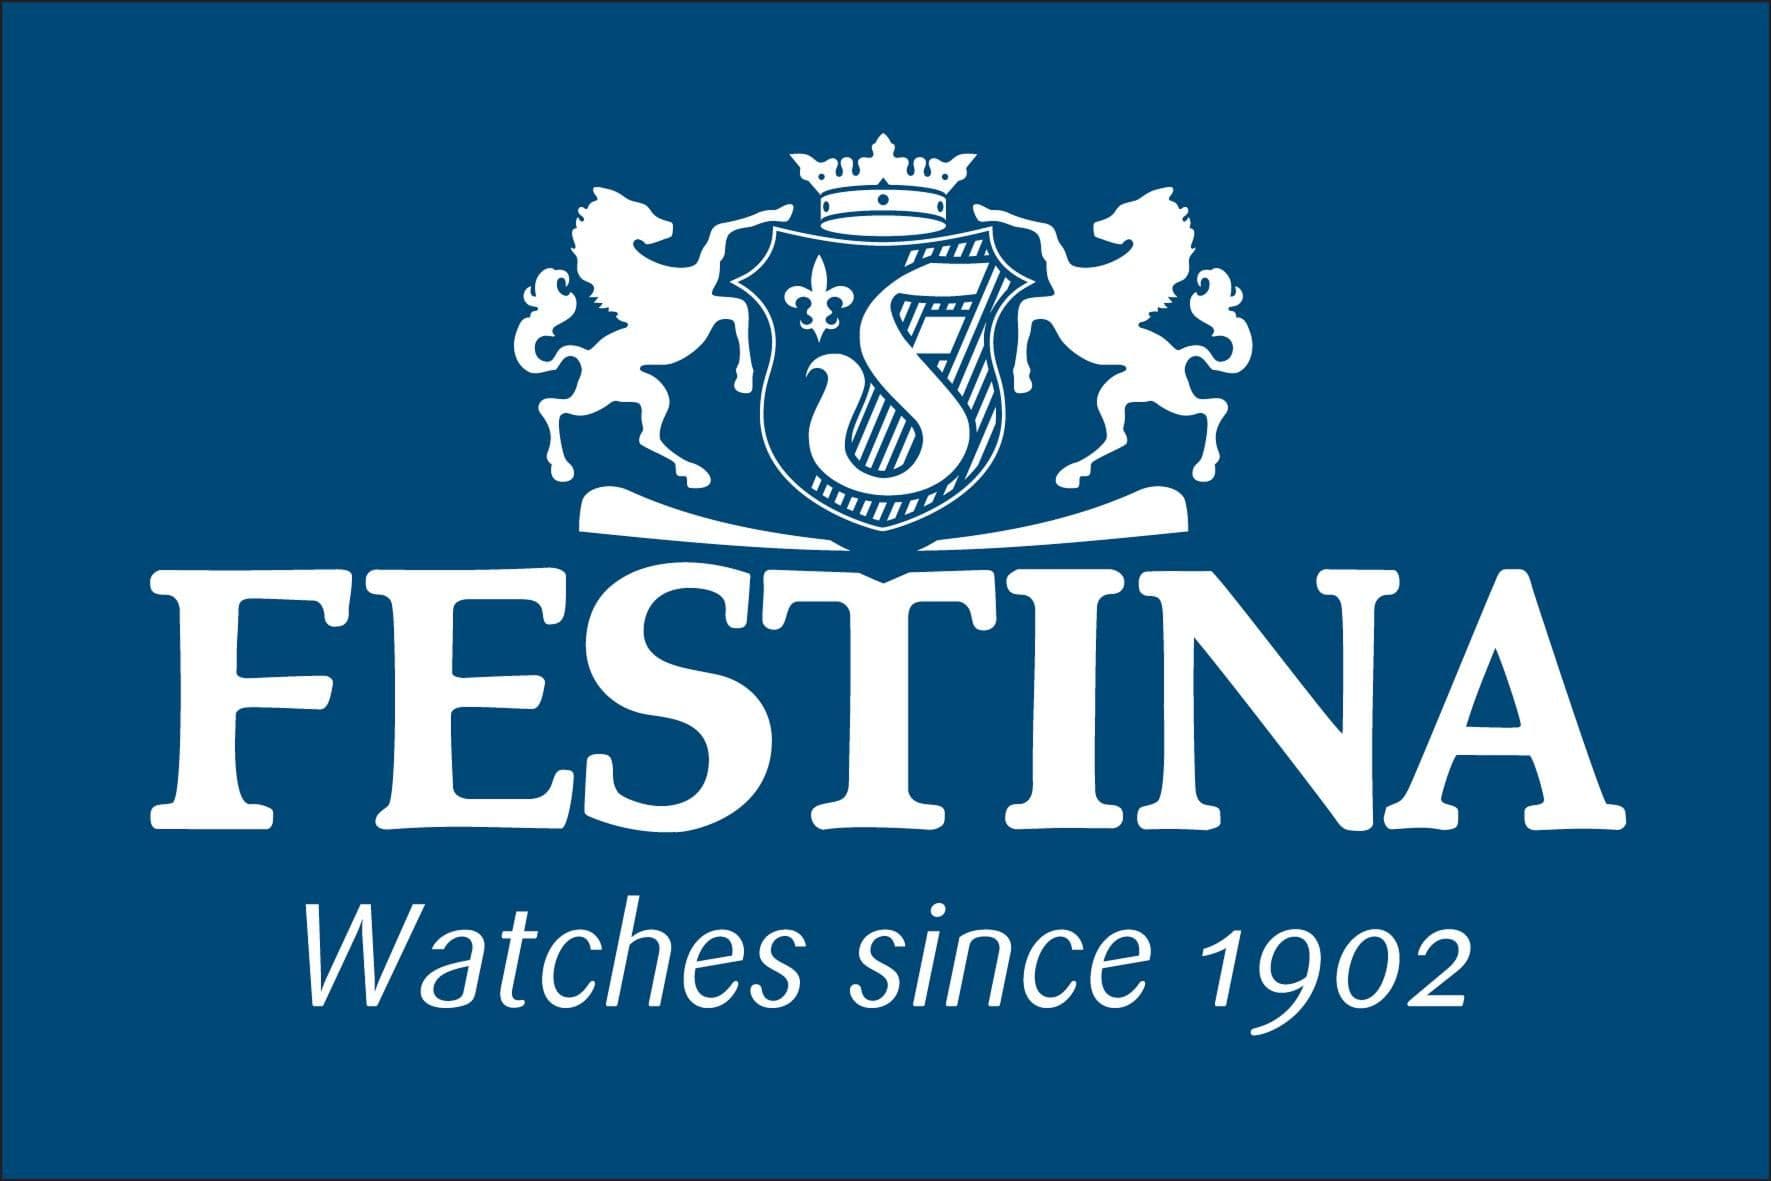 F6837/3 Festina Mens Blue Round Leather Strap Watch